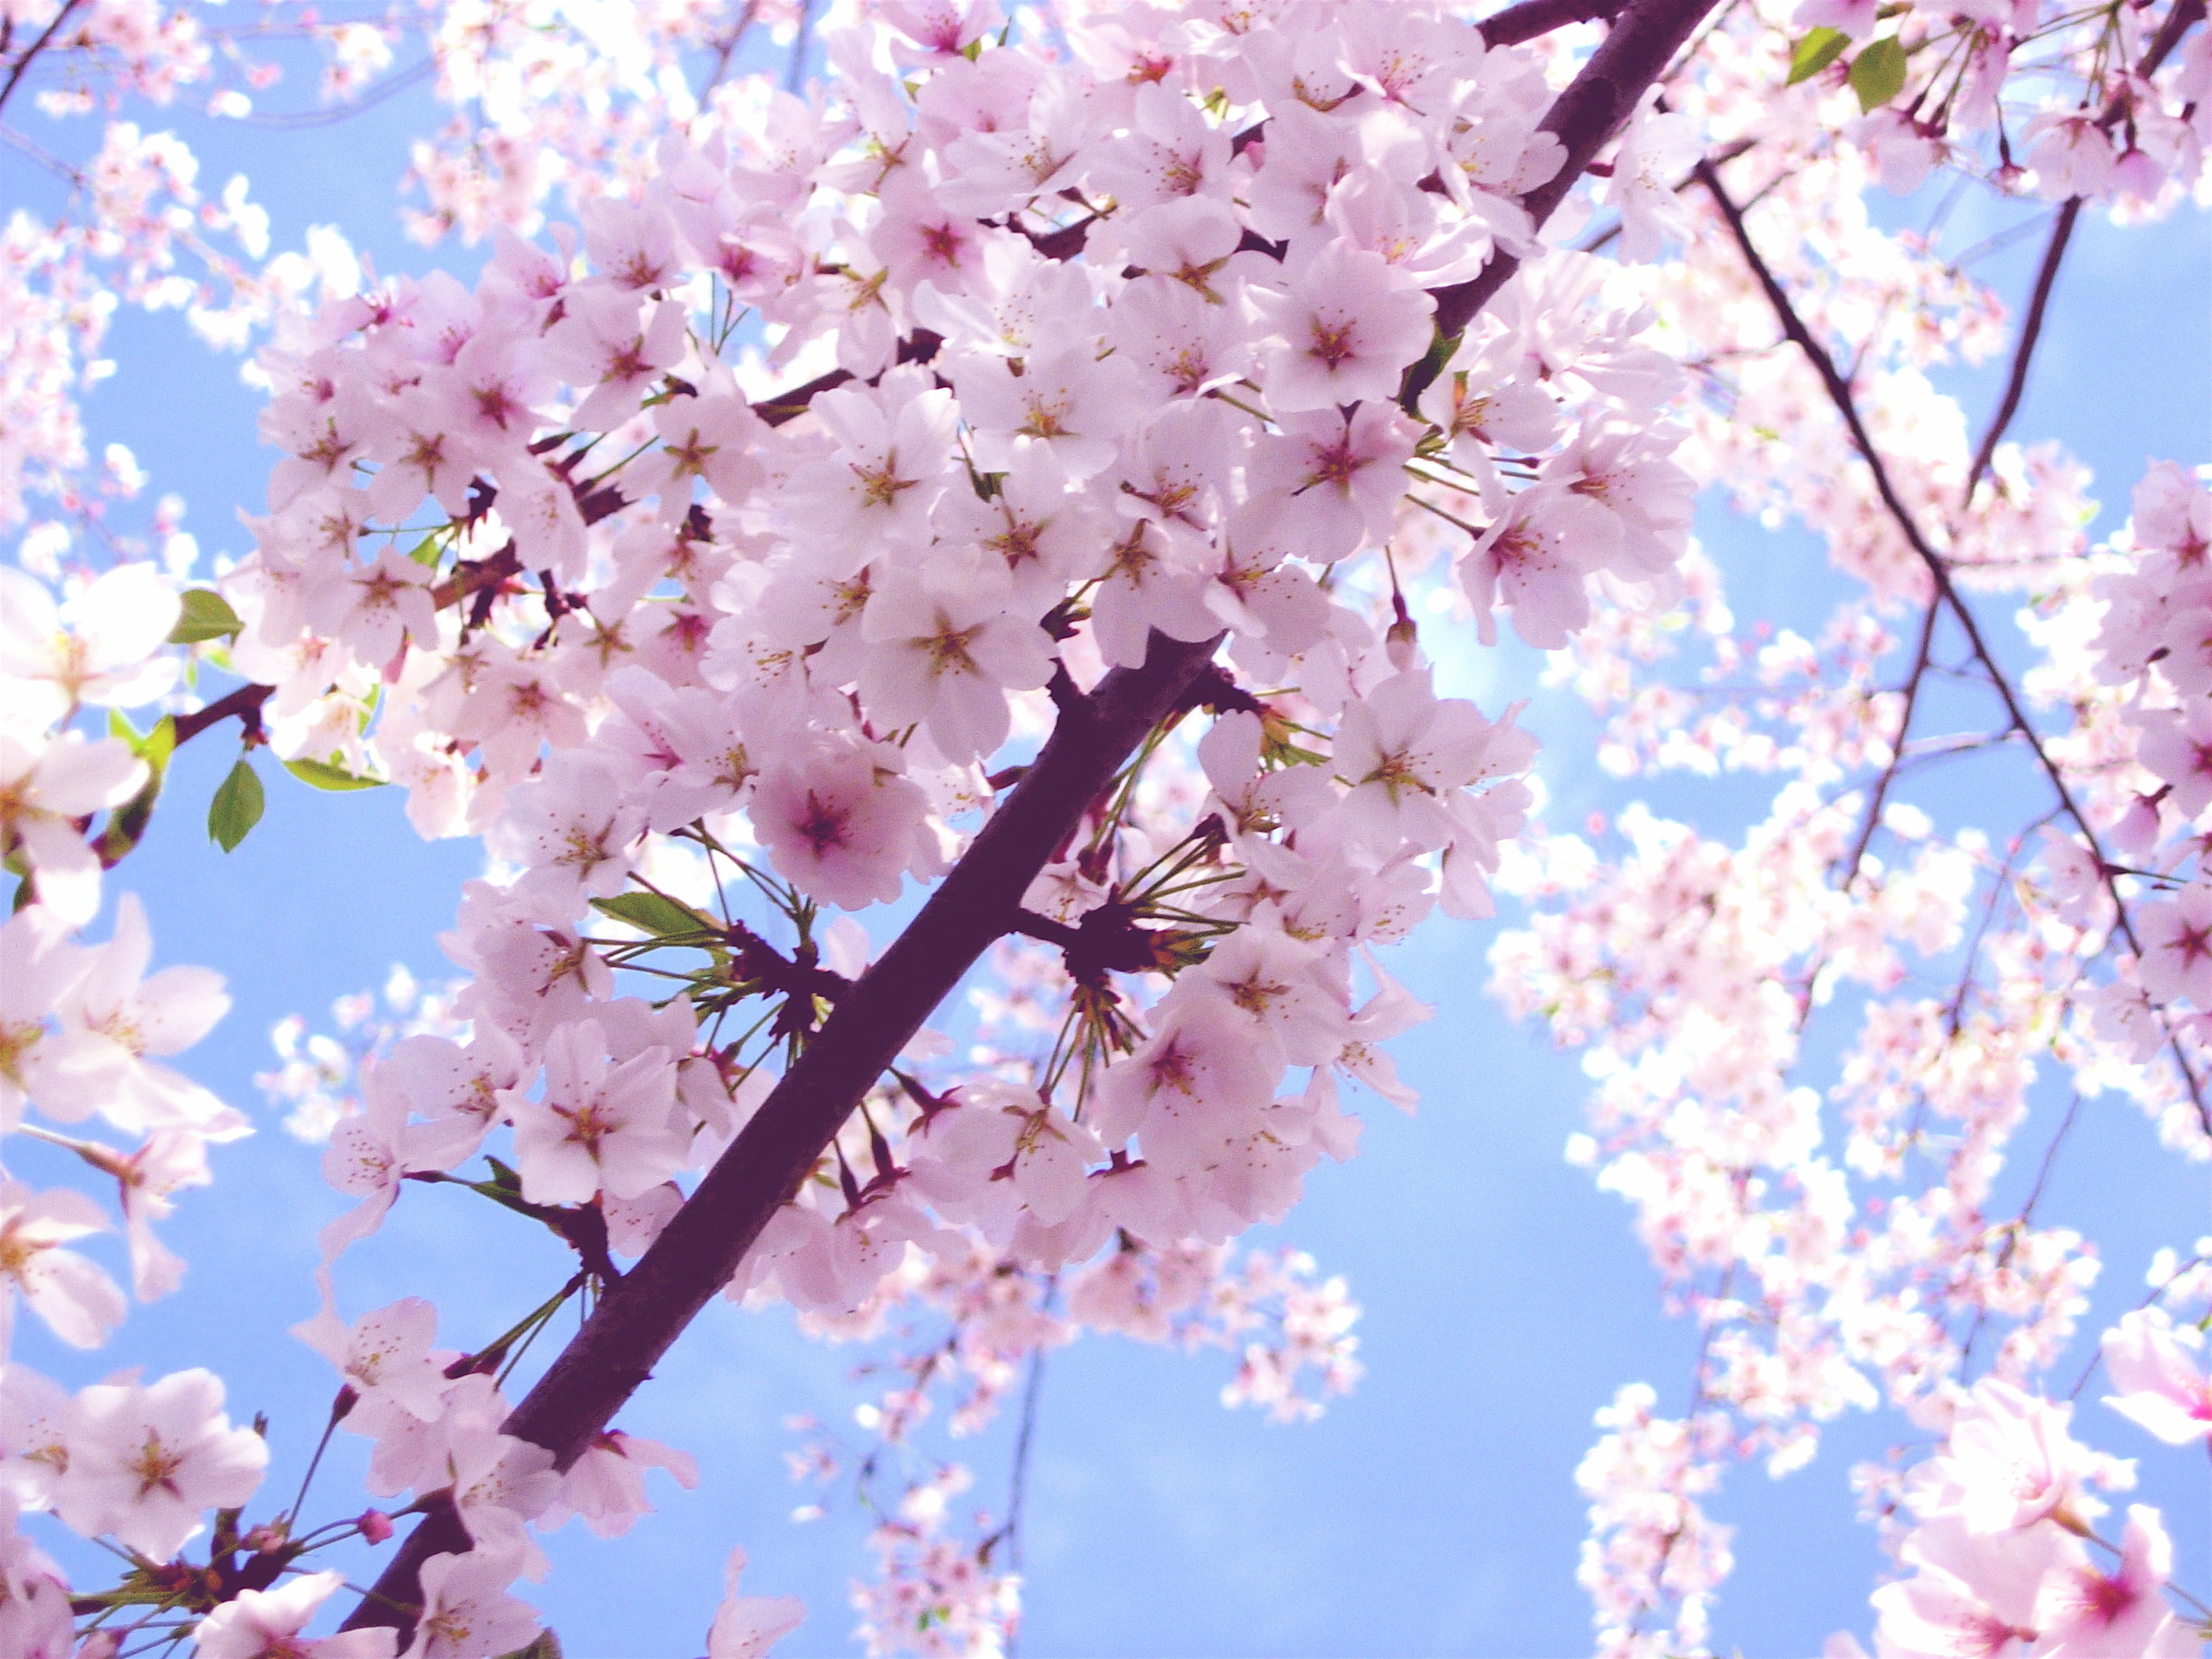 Cherry Blossom images Beautiful Cherry Blossom â¡ HD wallpaper and  background photos